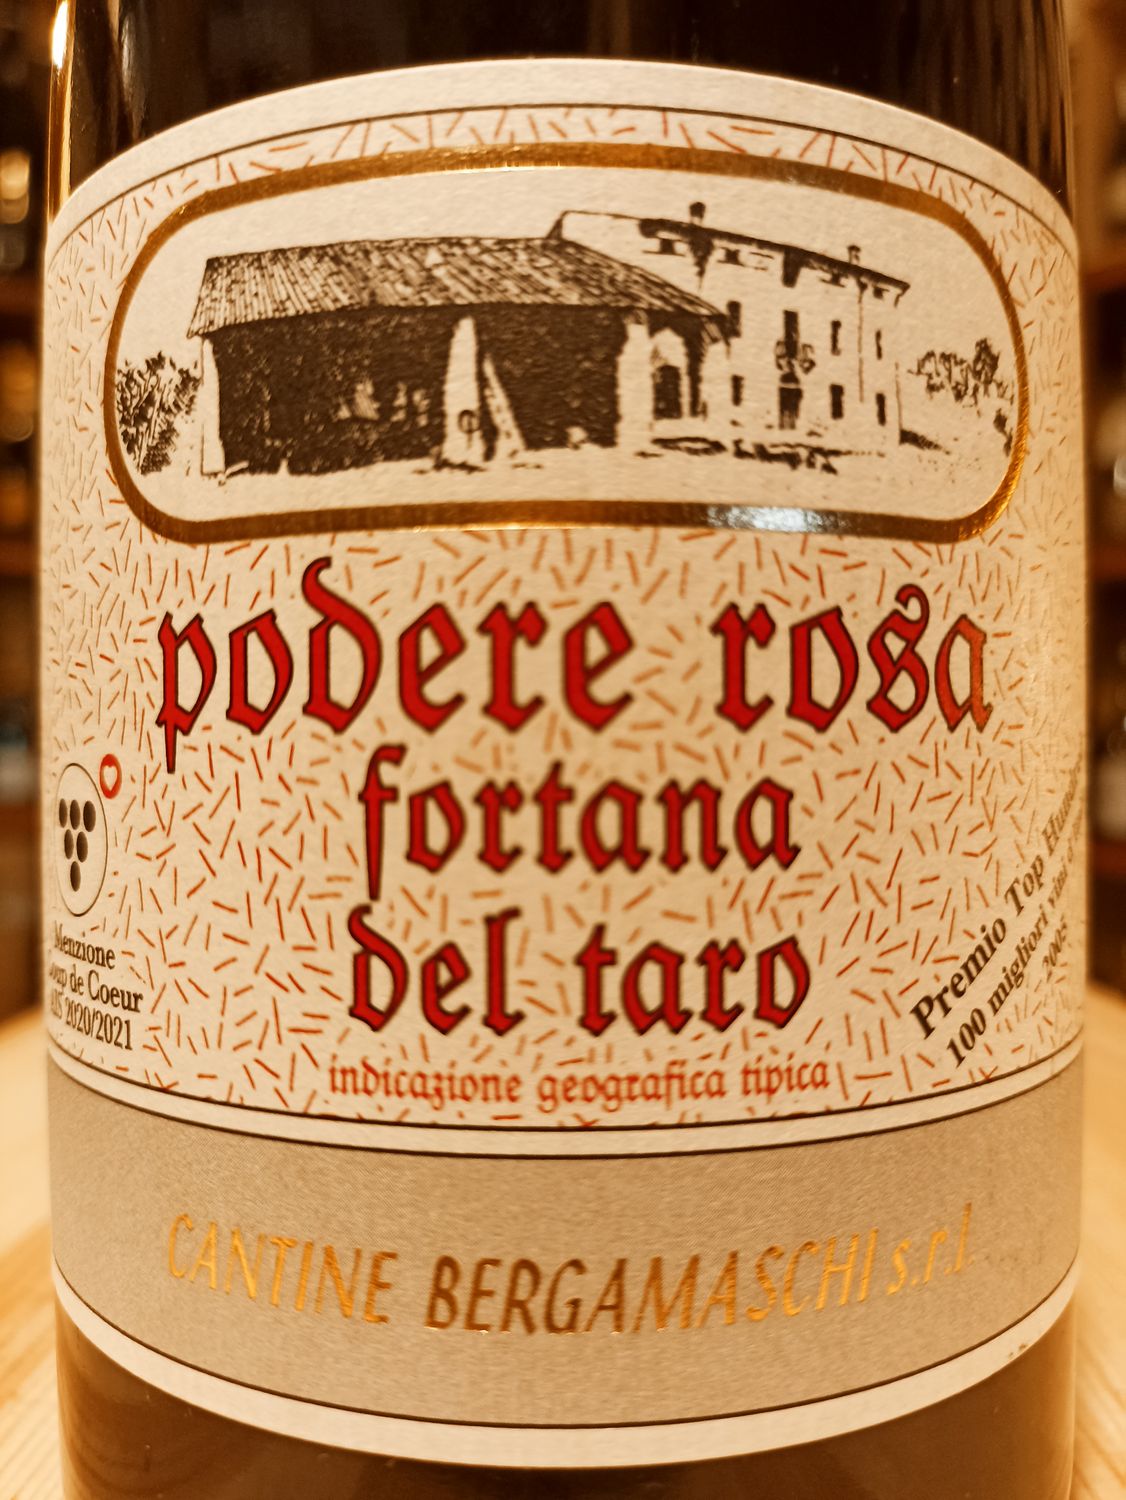 Fortana del Taro I.g.p. Podere Rosa - Cantine Bergamaschi - Sambpseto di Busseto (PR) 0,75 L